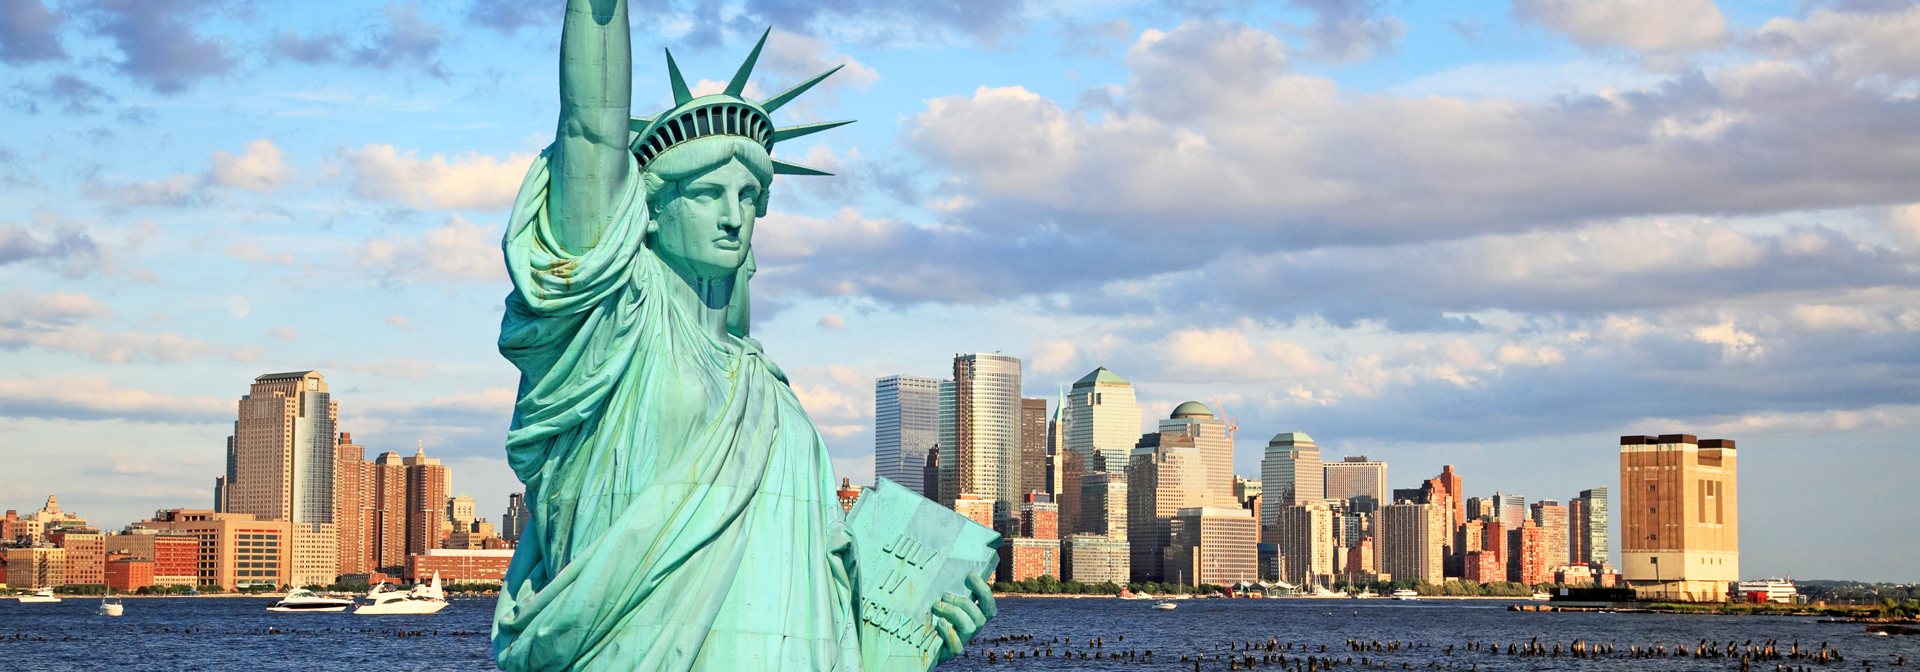 usa - new york_statue of liberty_01